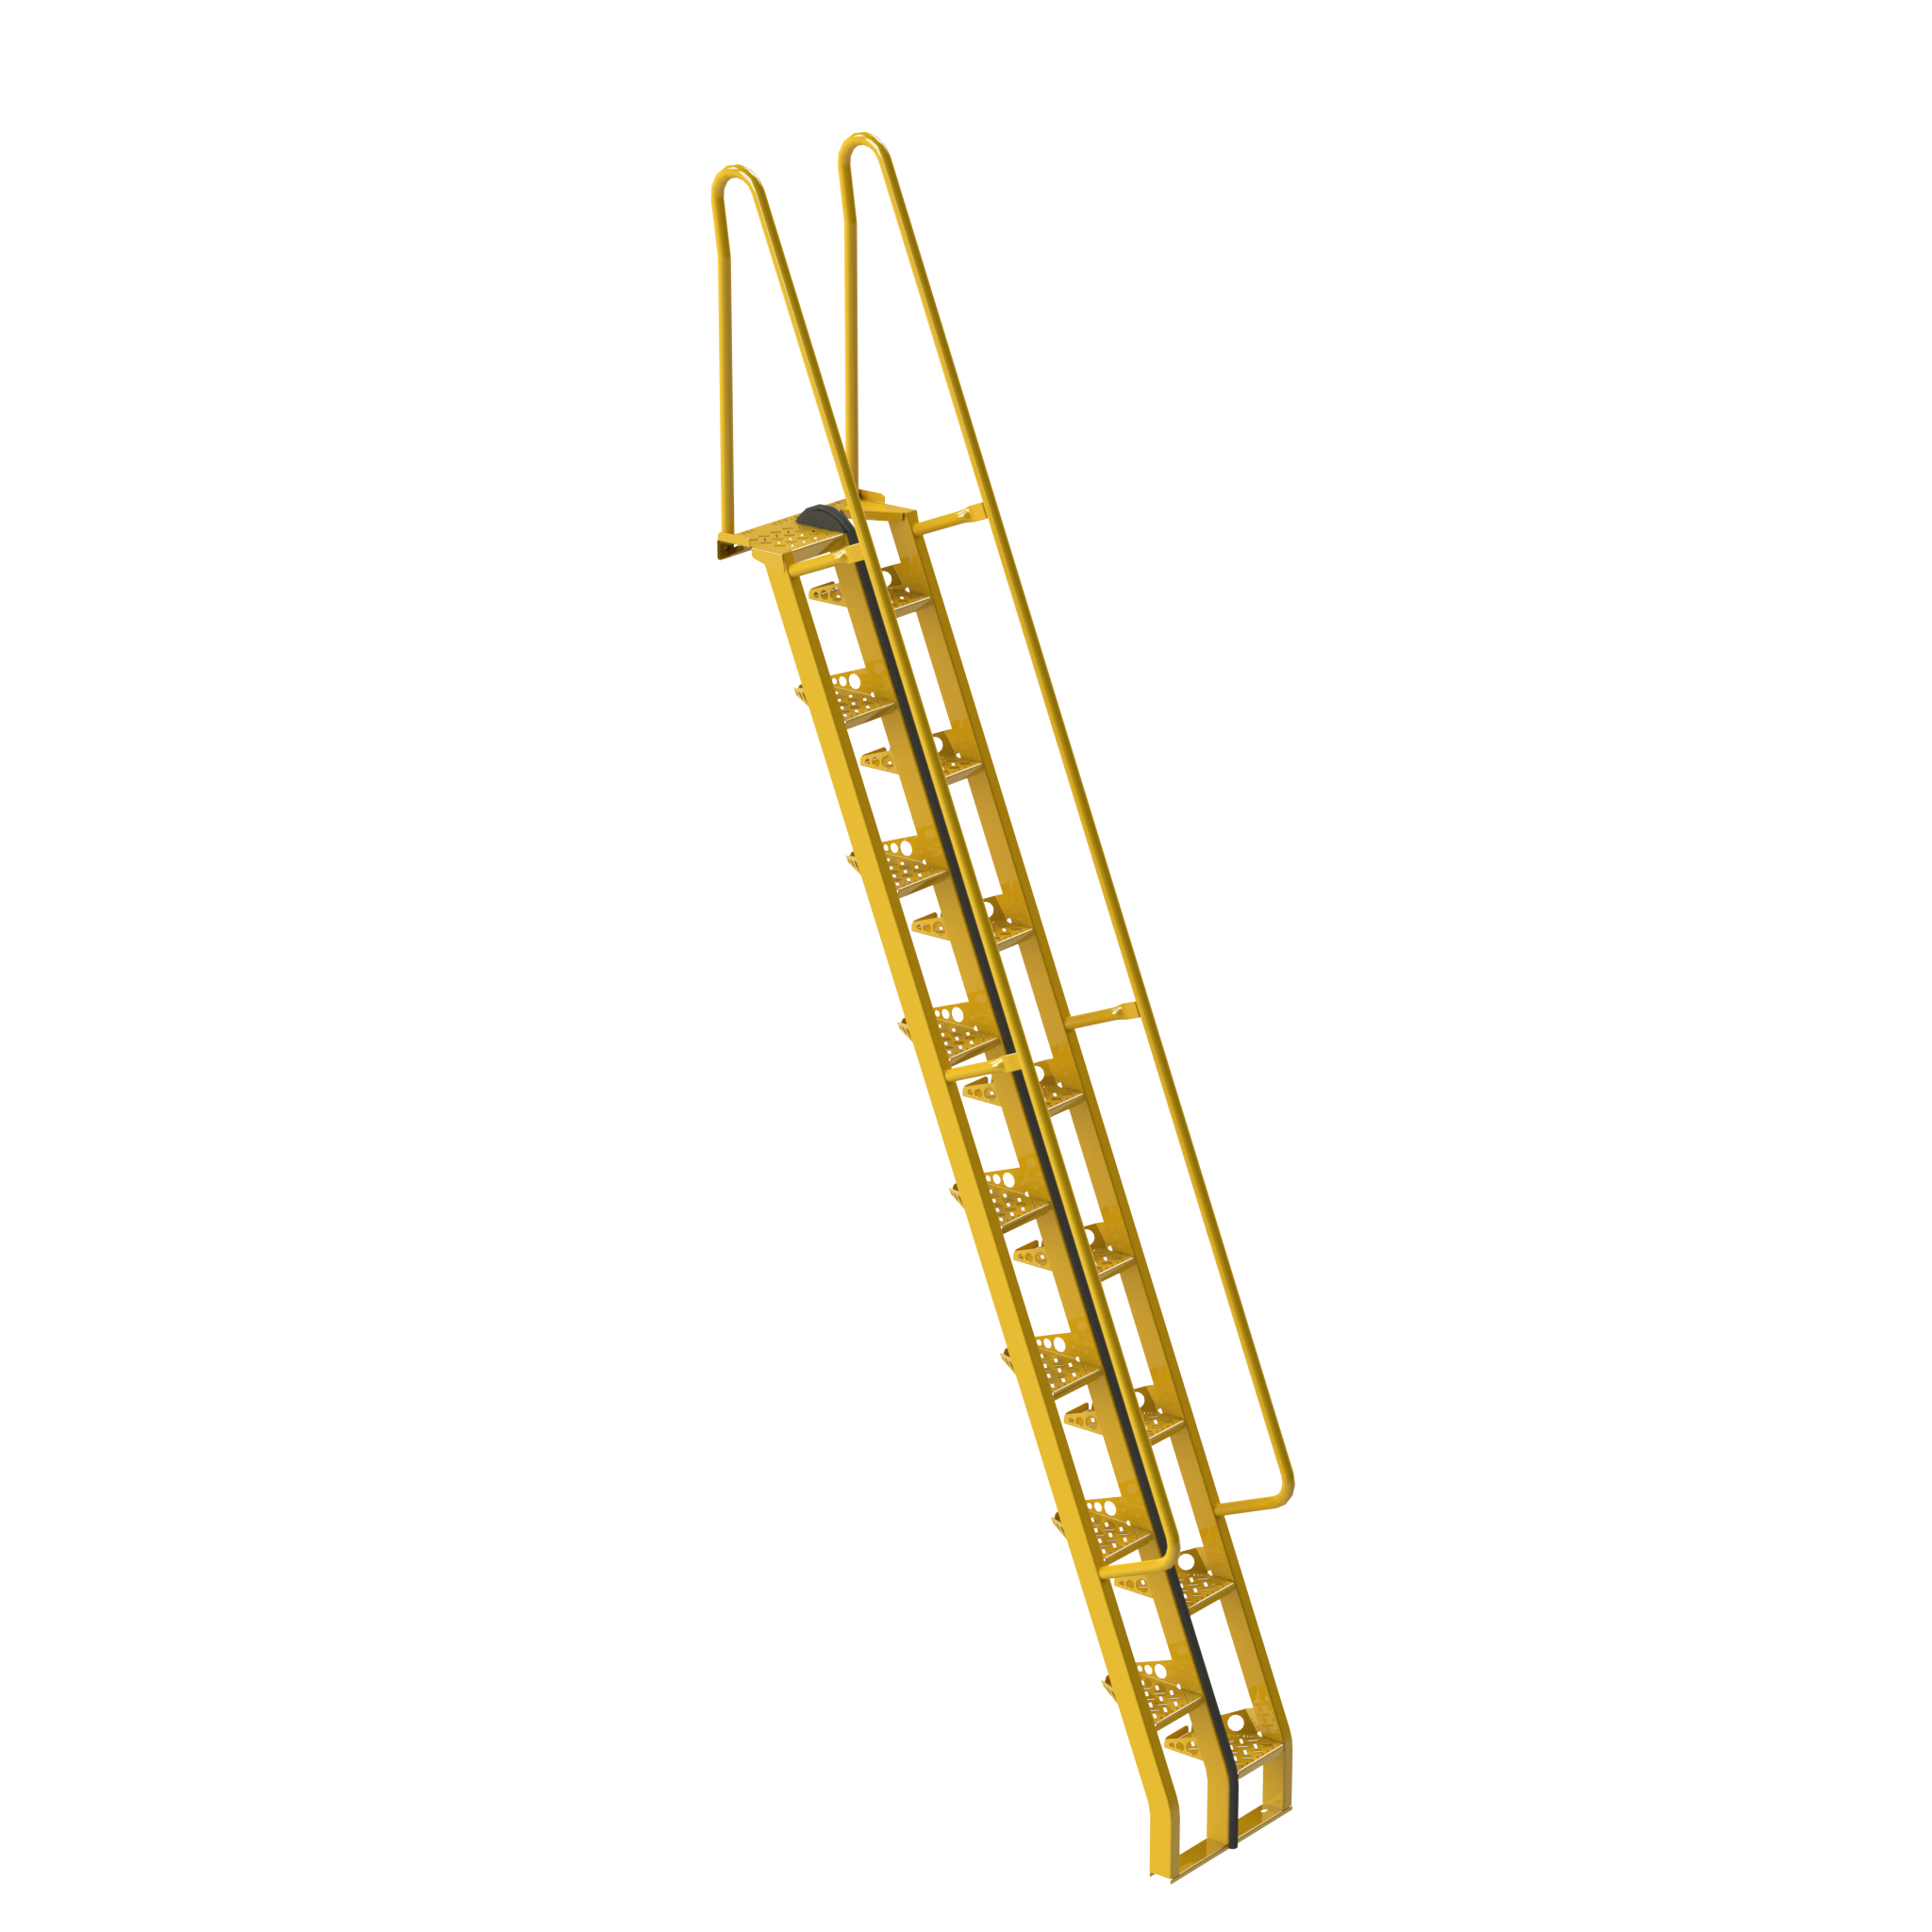 Alternating Tread Stair, Steel, Safety Yellow, 68 Degree, Standard Handrail